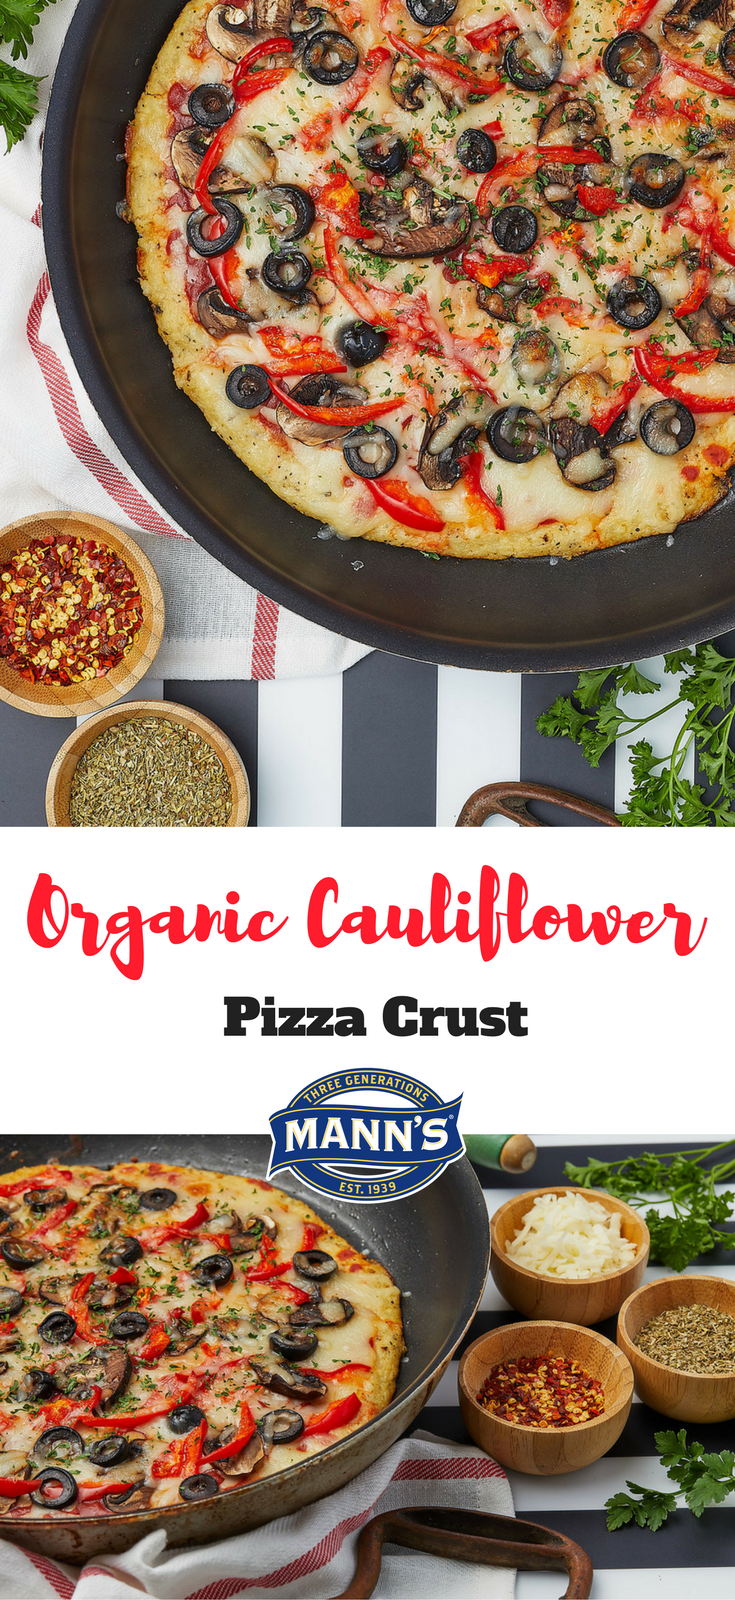 Organic Cauliflower Pizza Crust | Mann's Fresh Vegetables